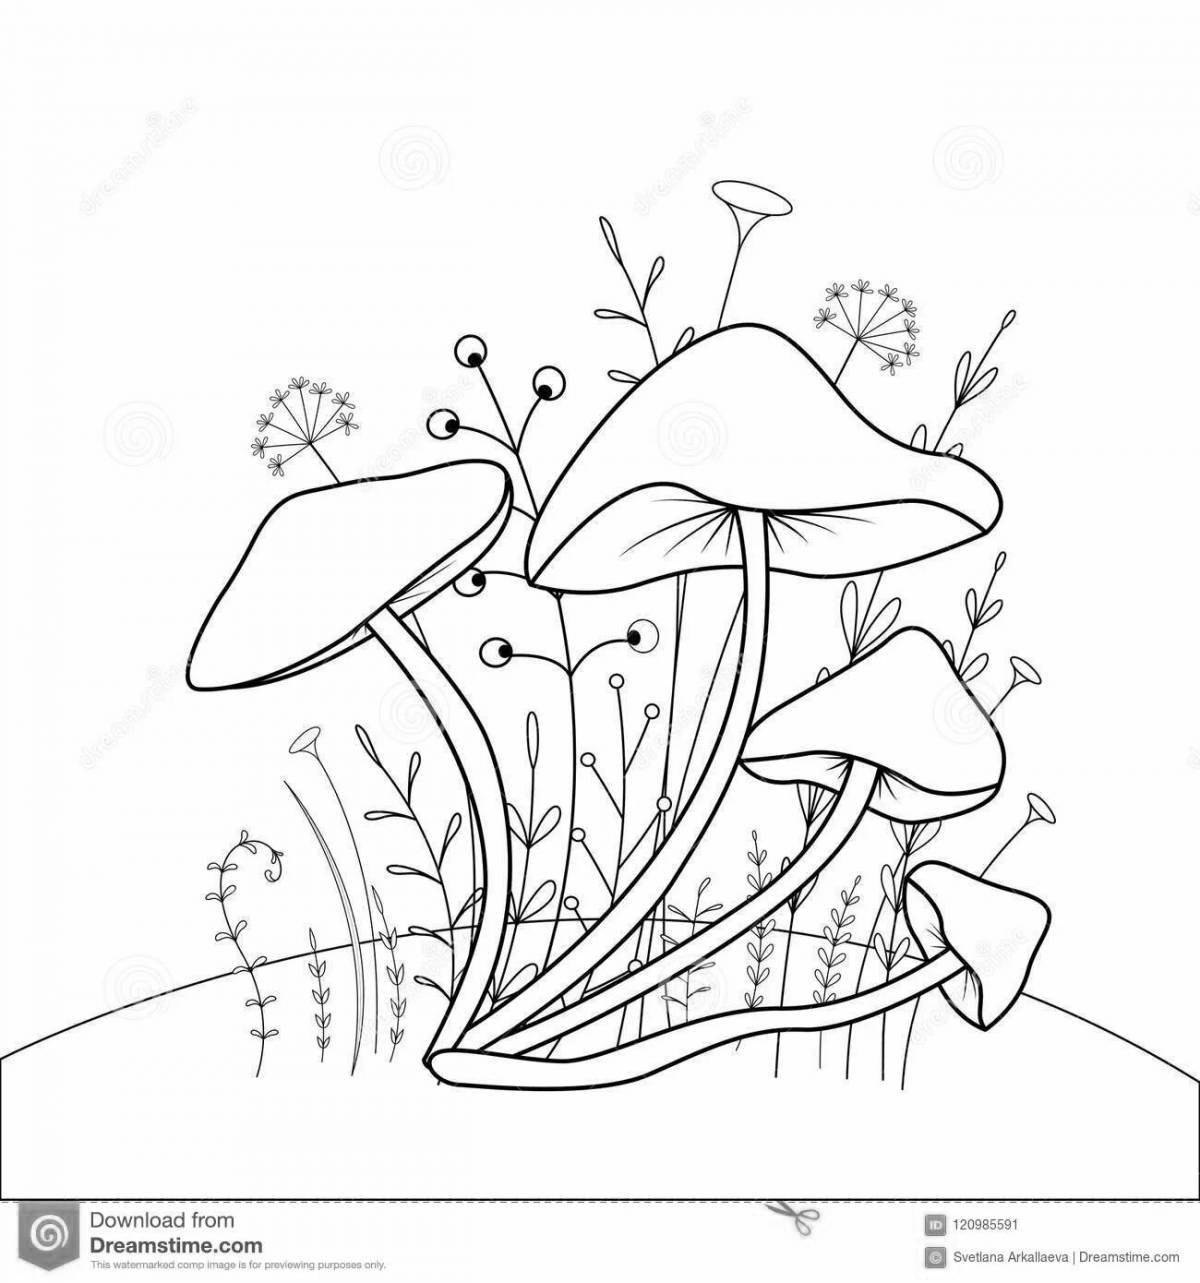 Cute chanterelle mushroom coloring page